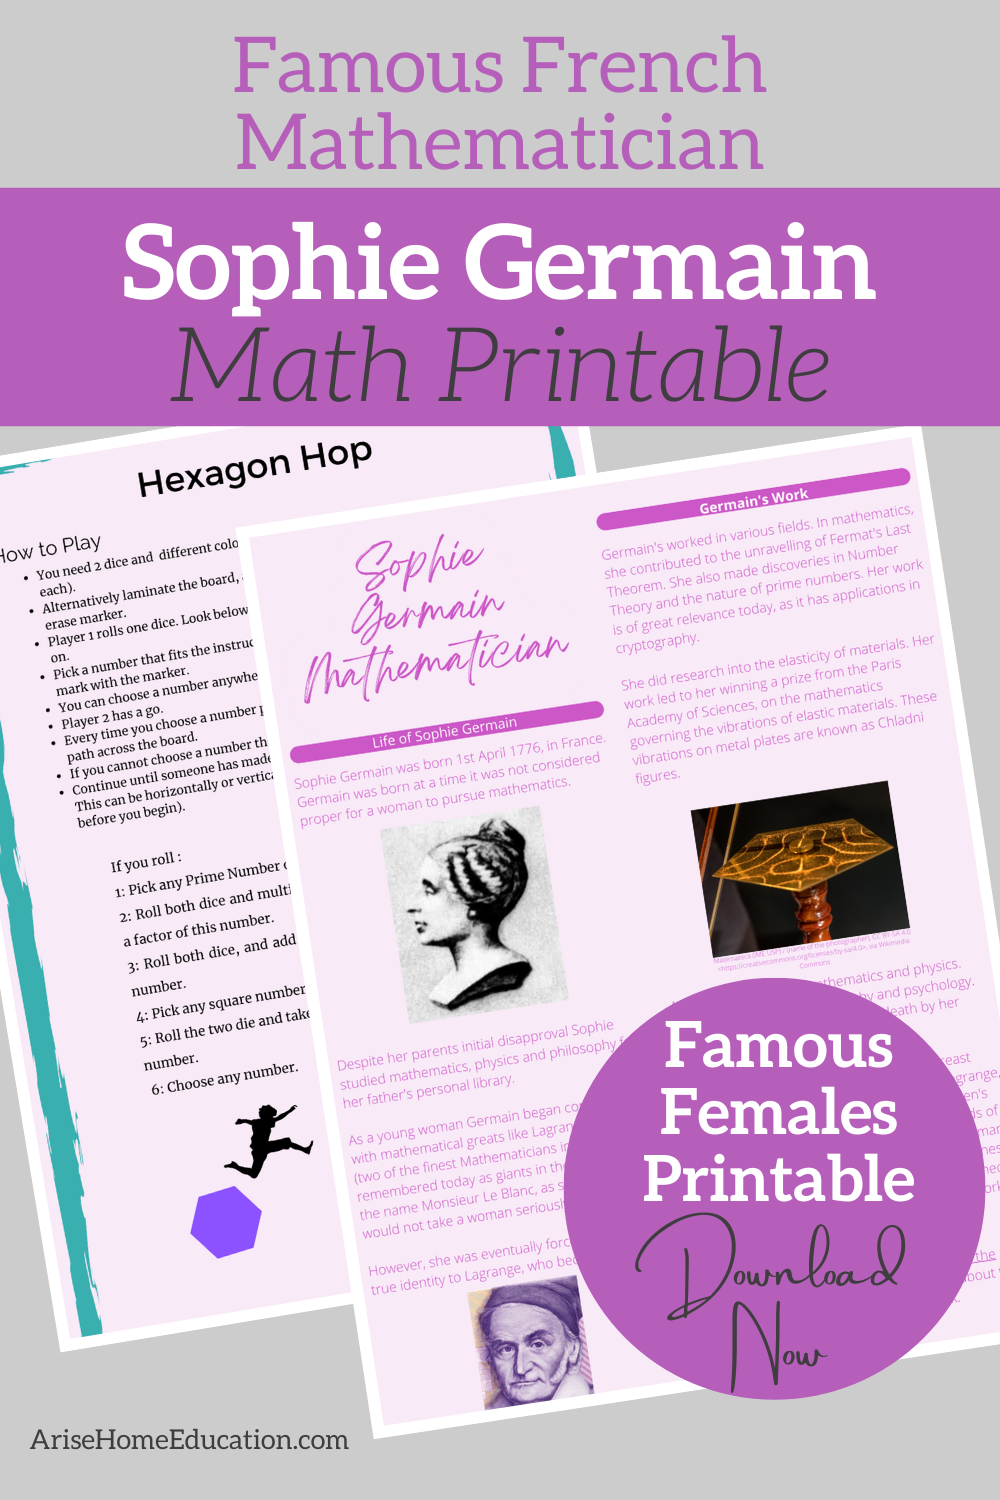 image of Sophie Germain Math Printable at AriseHomeEducation.com